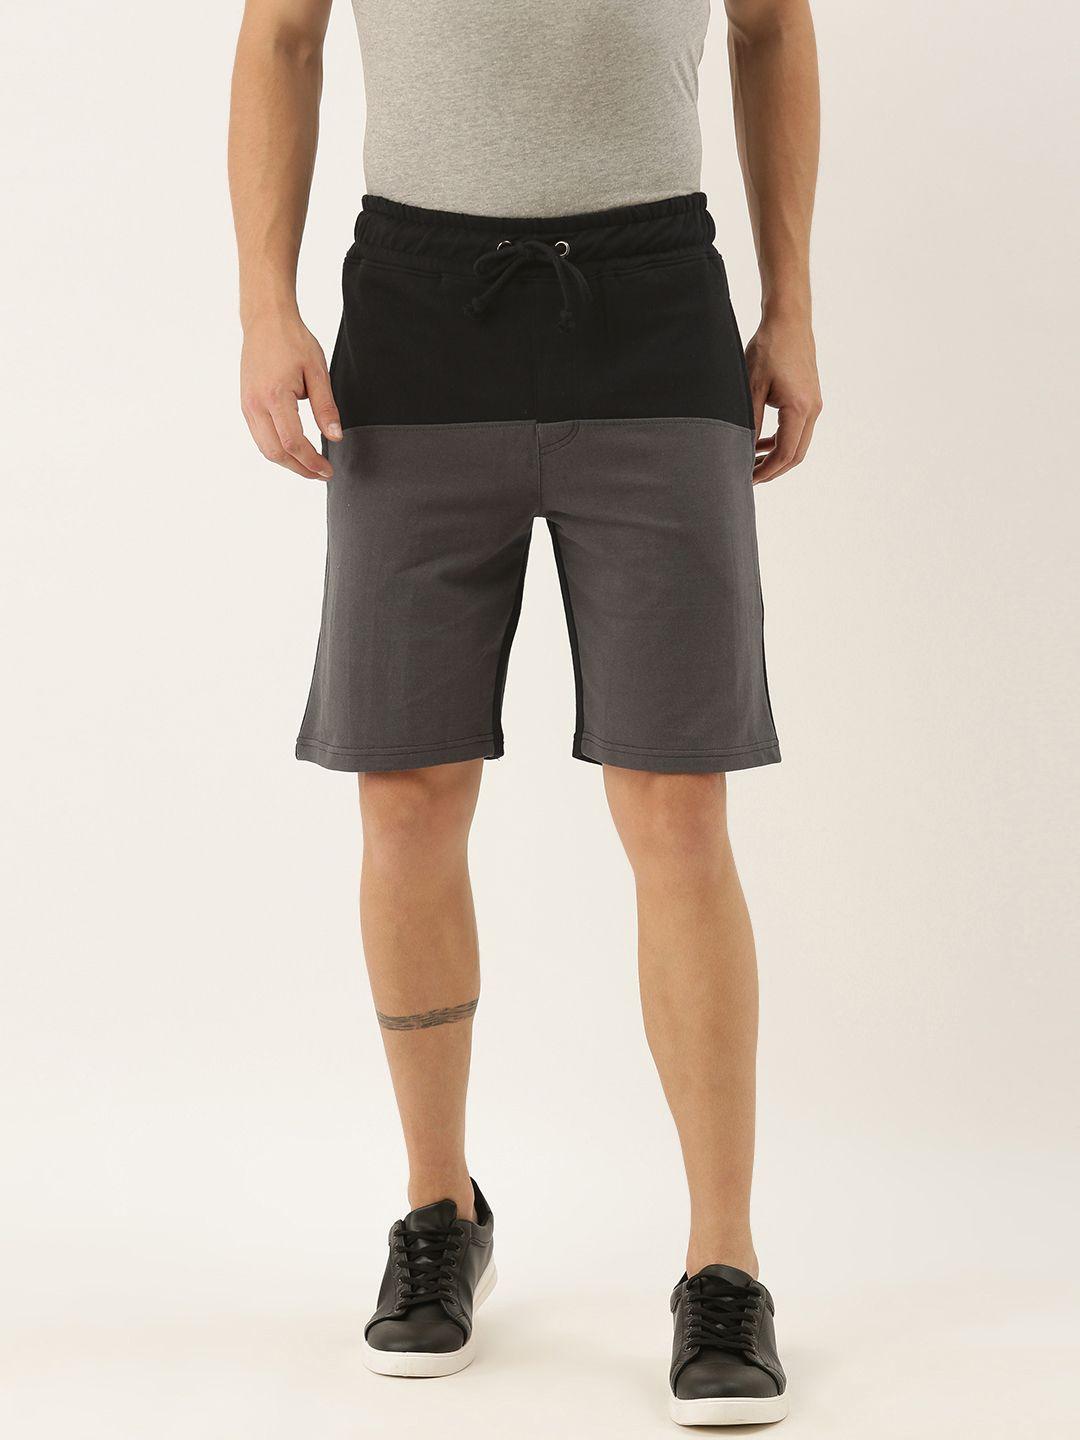 arise men black & grey colourblocked regular fit pure cotton shorts